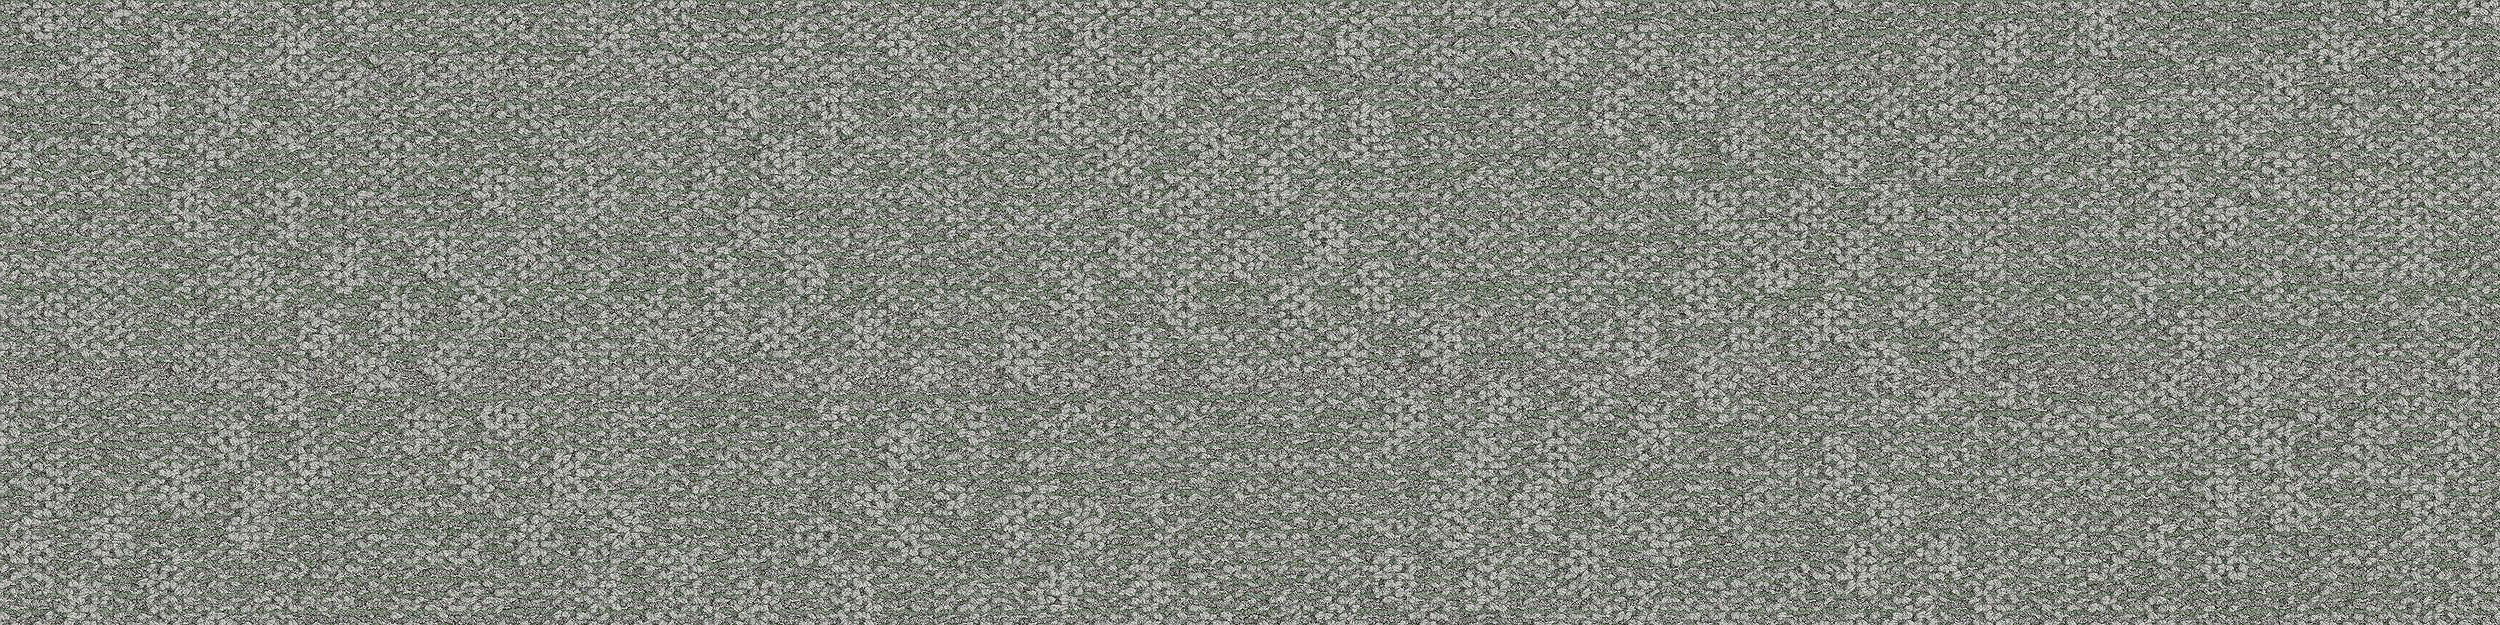 Prickly as a Pear Carpet Tile in Aloe numéro d’image 3